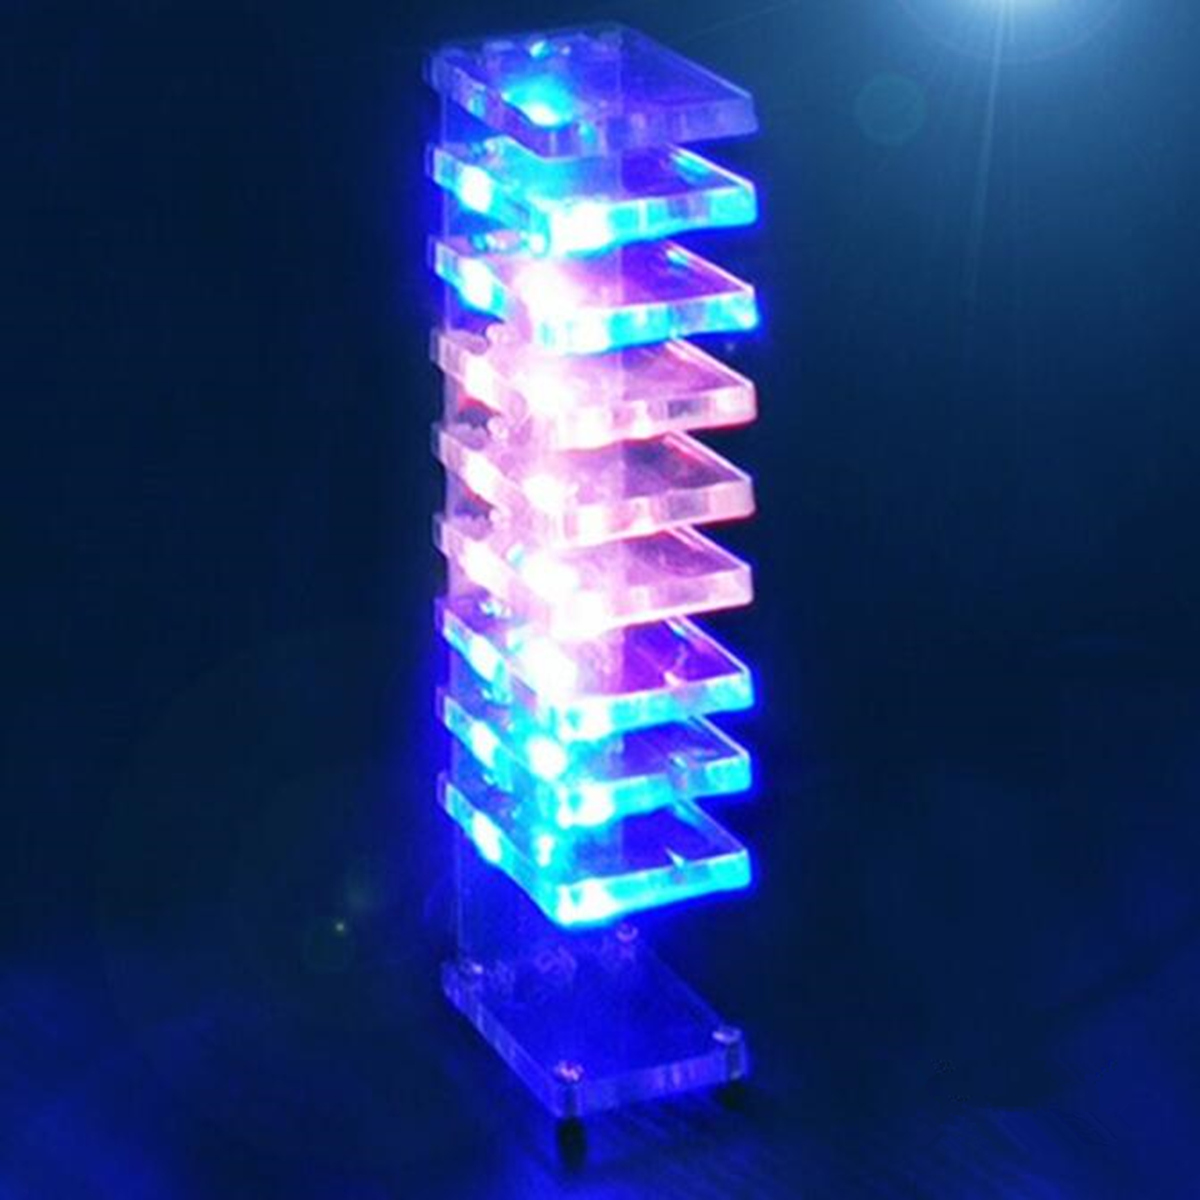 

20mm x 30mm x 160mm DIY Dream Crystal Electronic Column Light Cube LED Music Voice Spectrum Kit